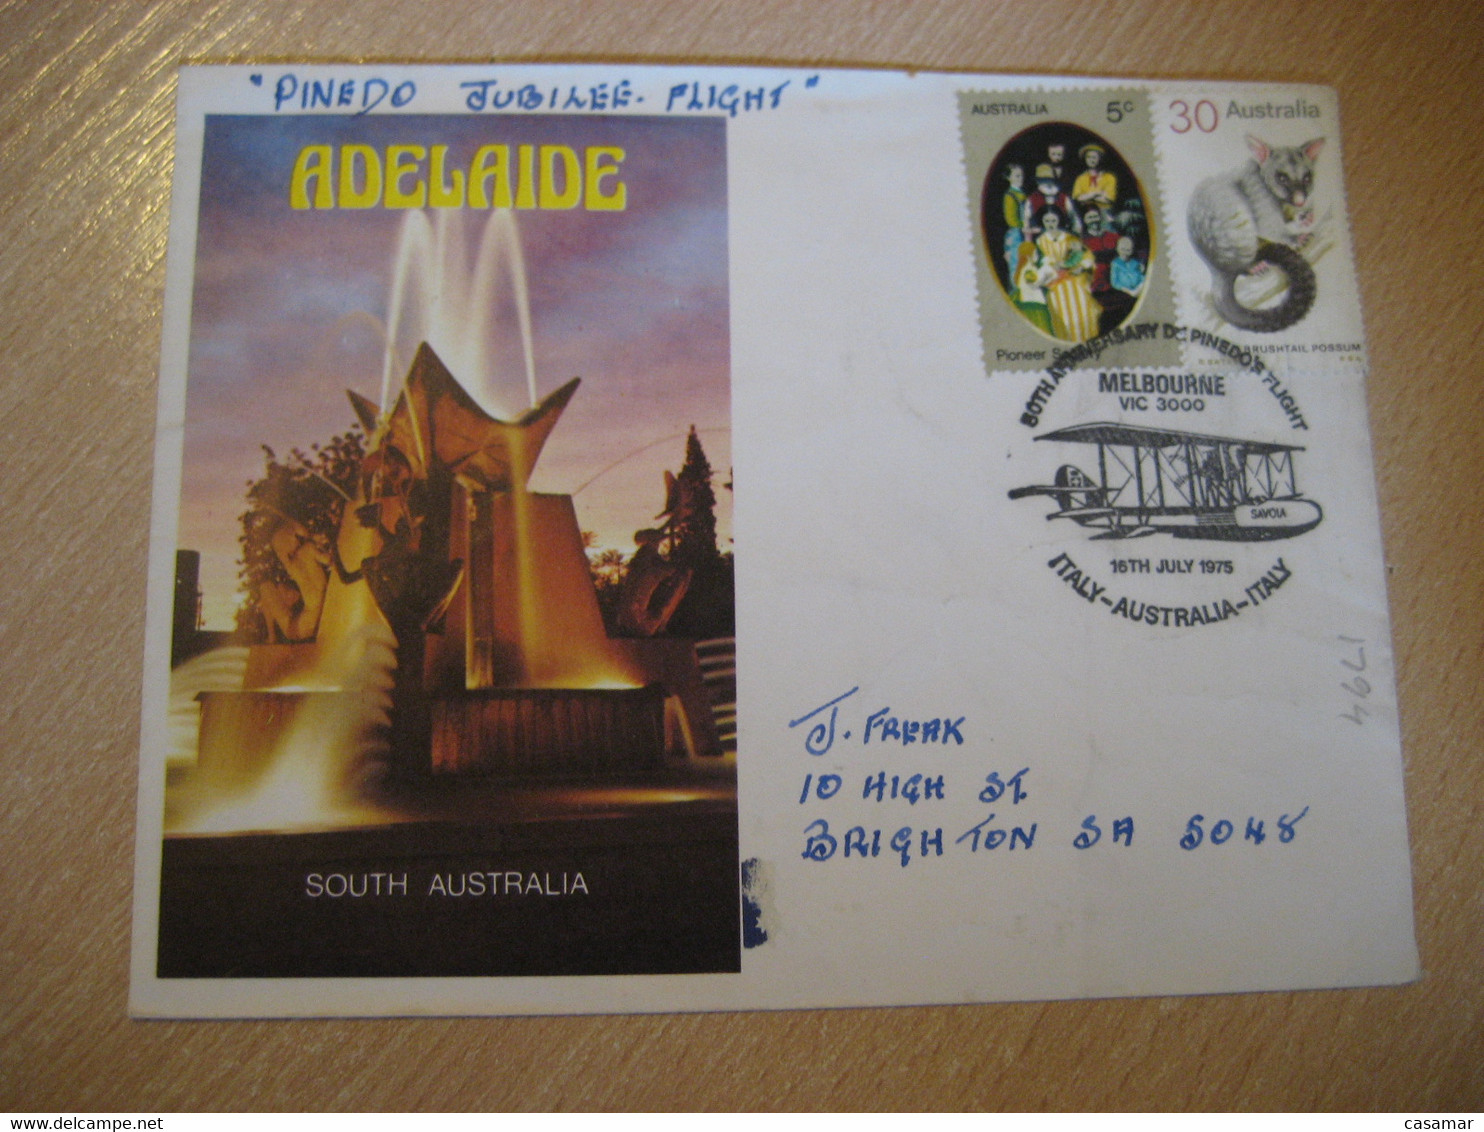 ITALY Fiumicino Airport AUSTRALIA 50th Anniv. Pinedo Flight Samoa Plane 1975 Cancel Adelaide Cover AUSTRALIA - First Flight Covers